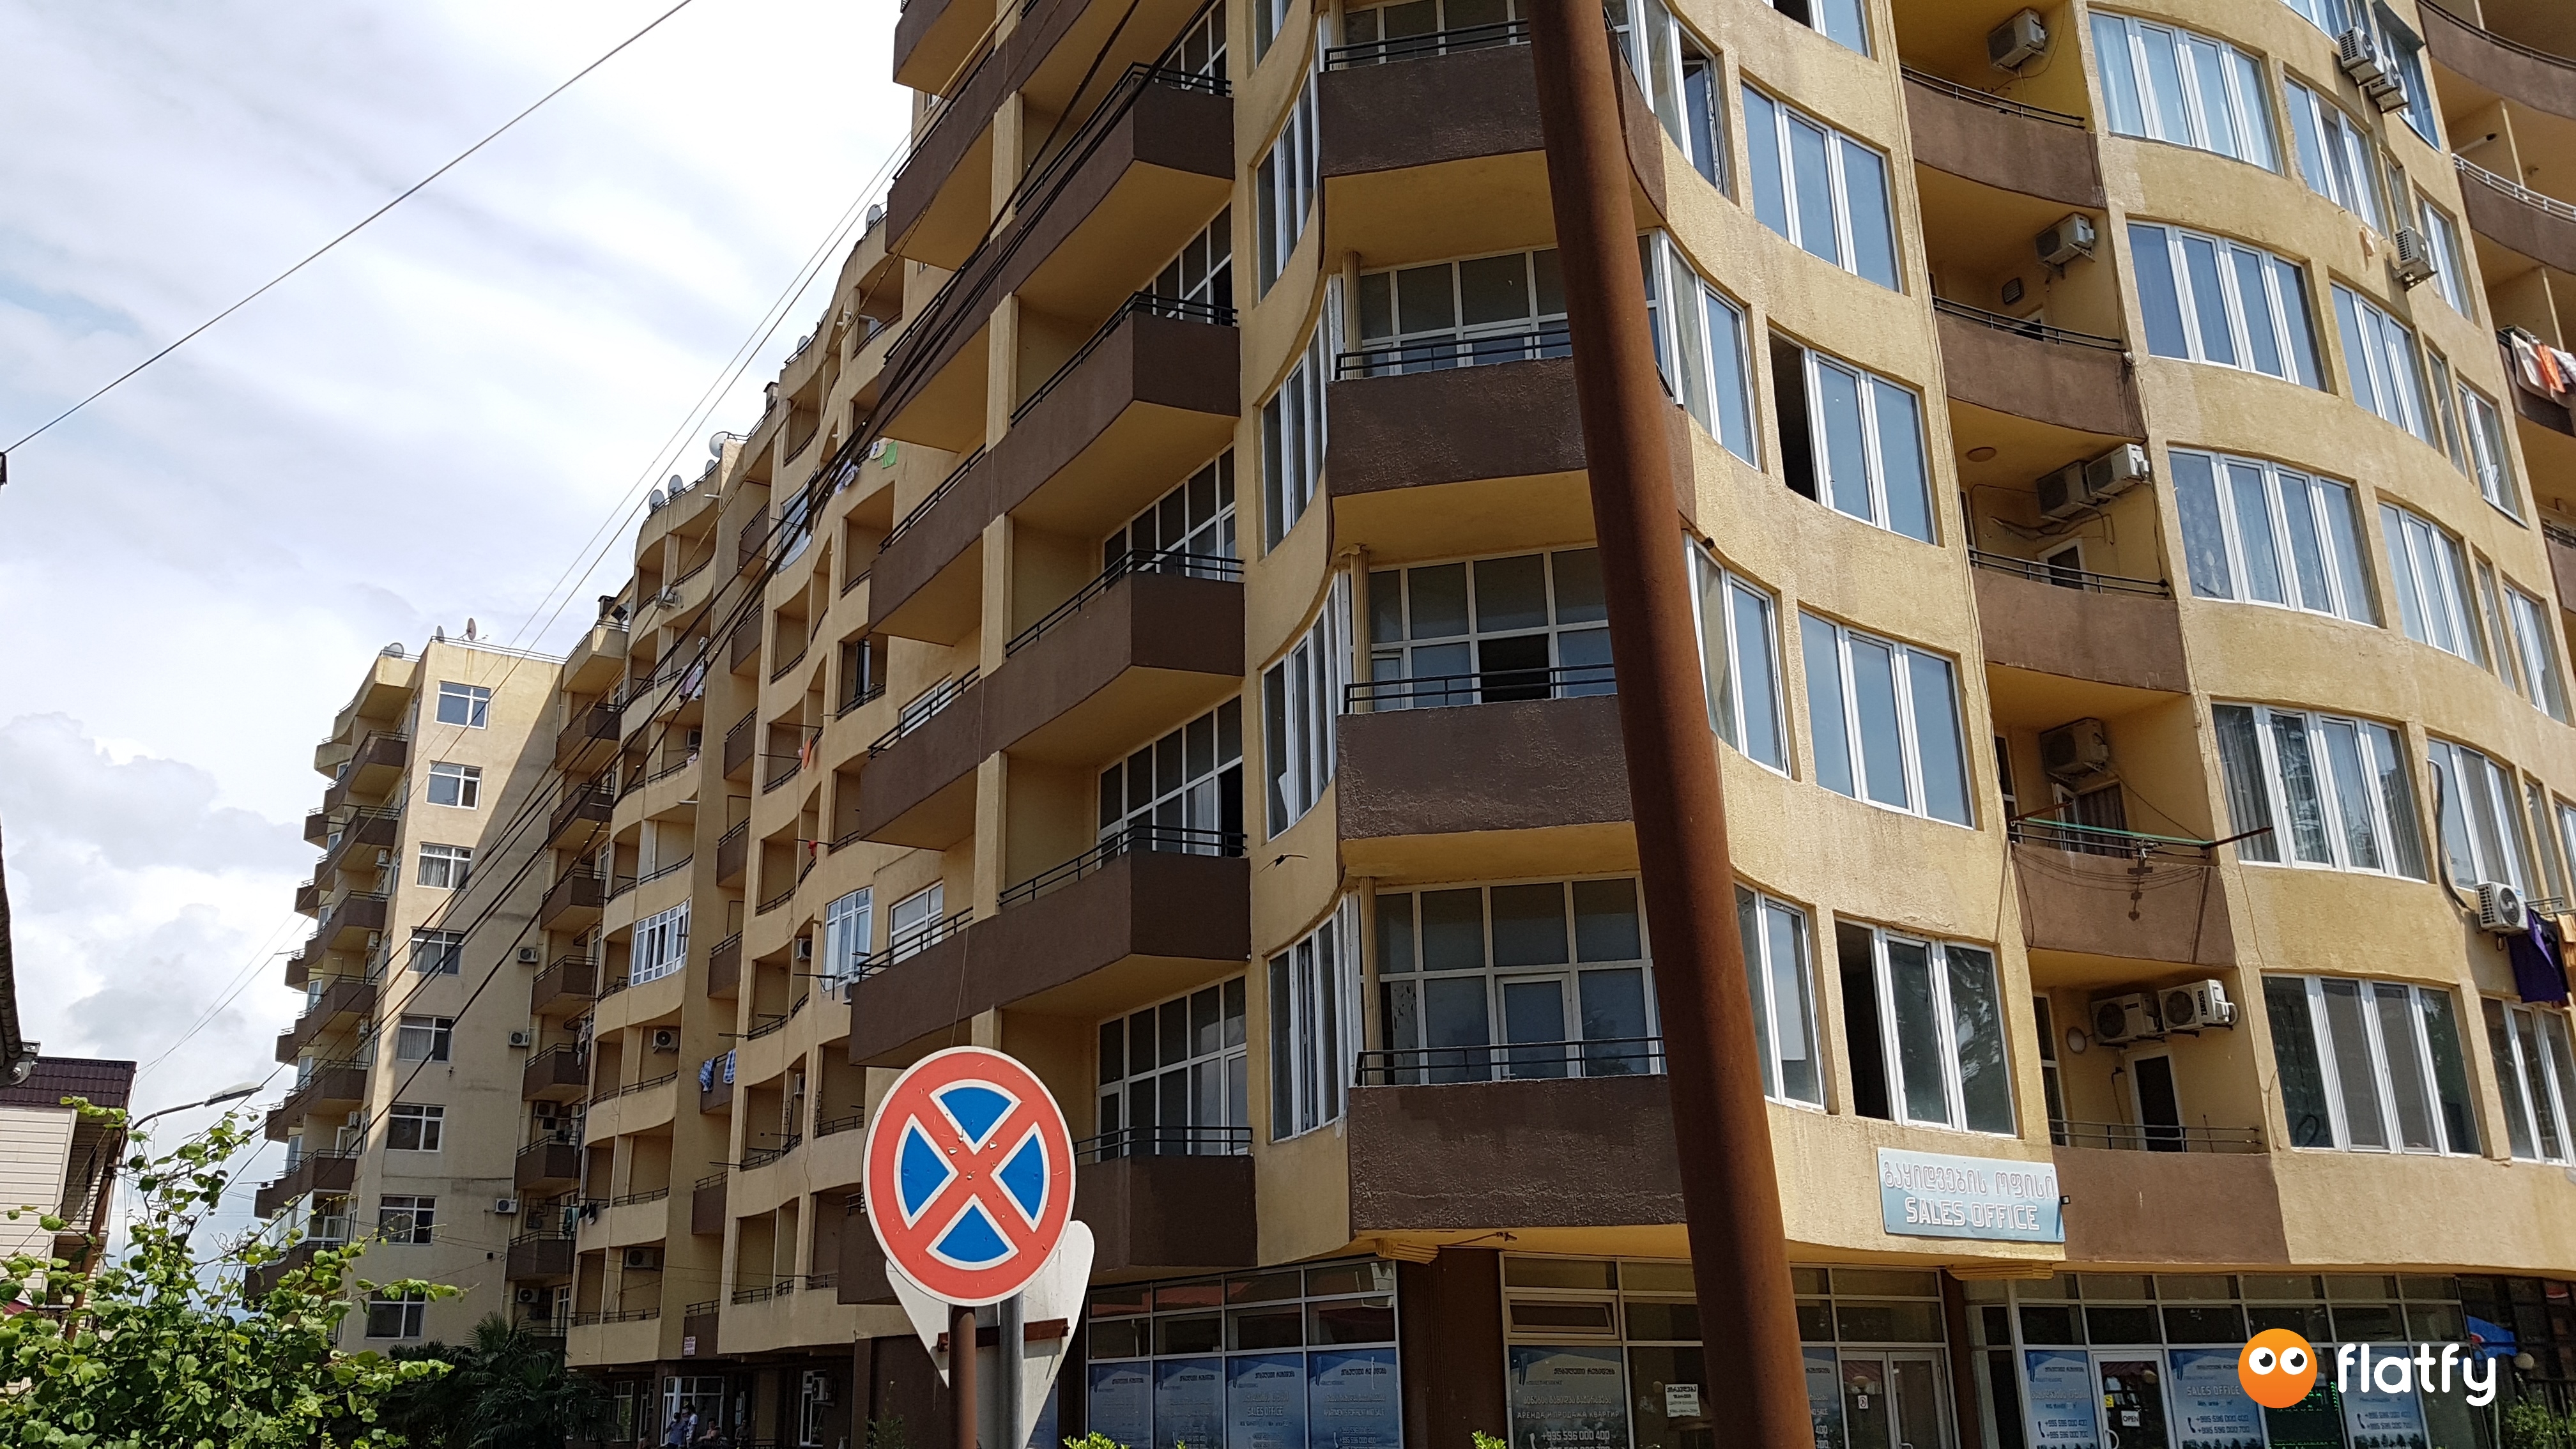 Construction progress Kobuleti Residence - Angle 4, June 2019